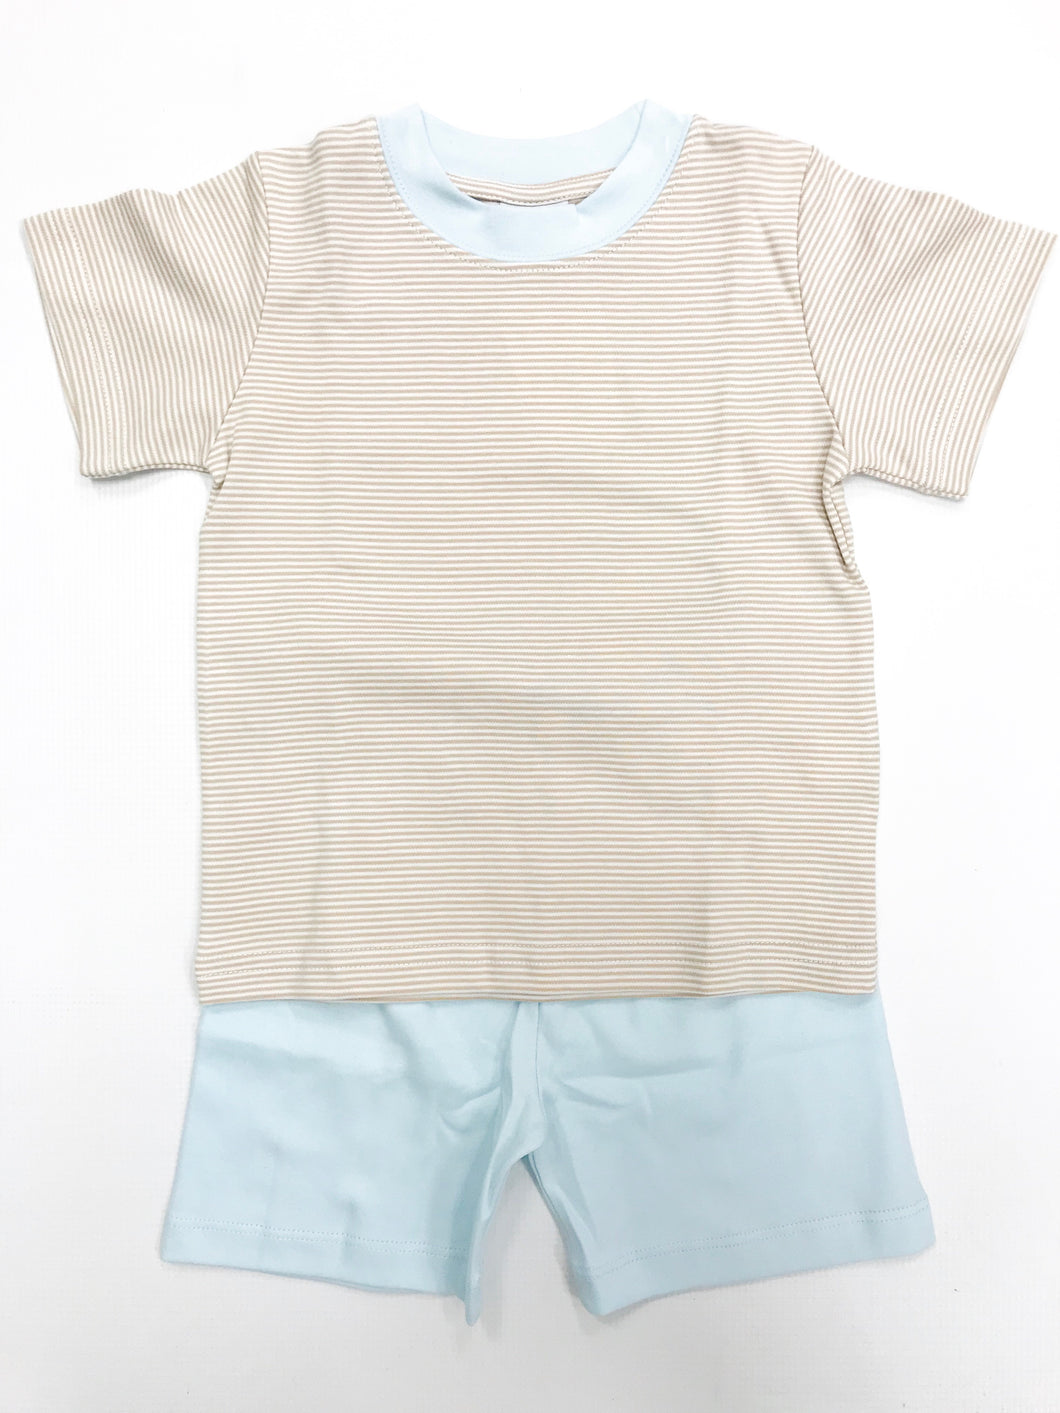 Tan Stripe/Blue Short Set